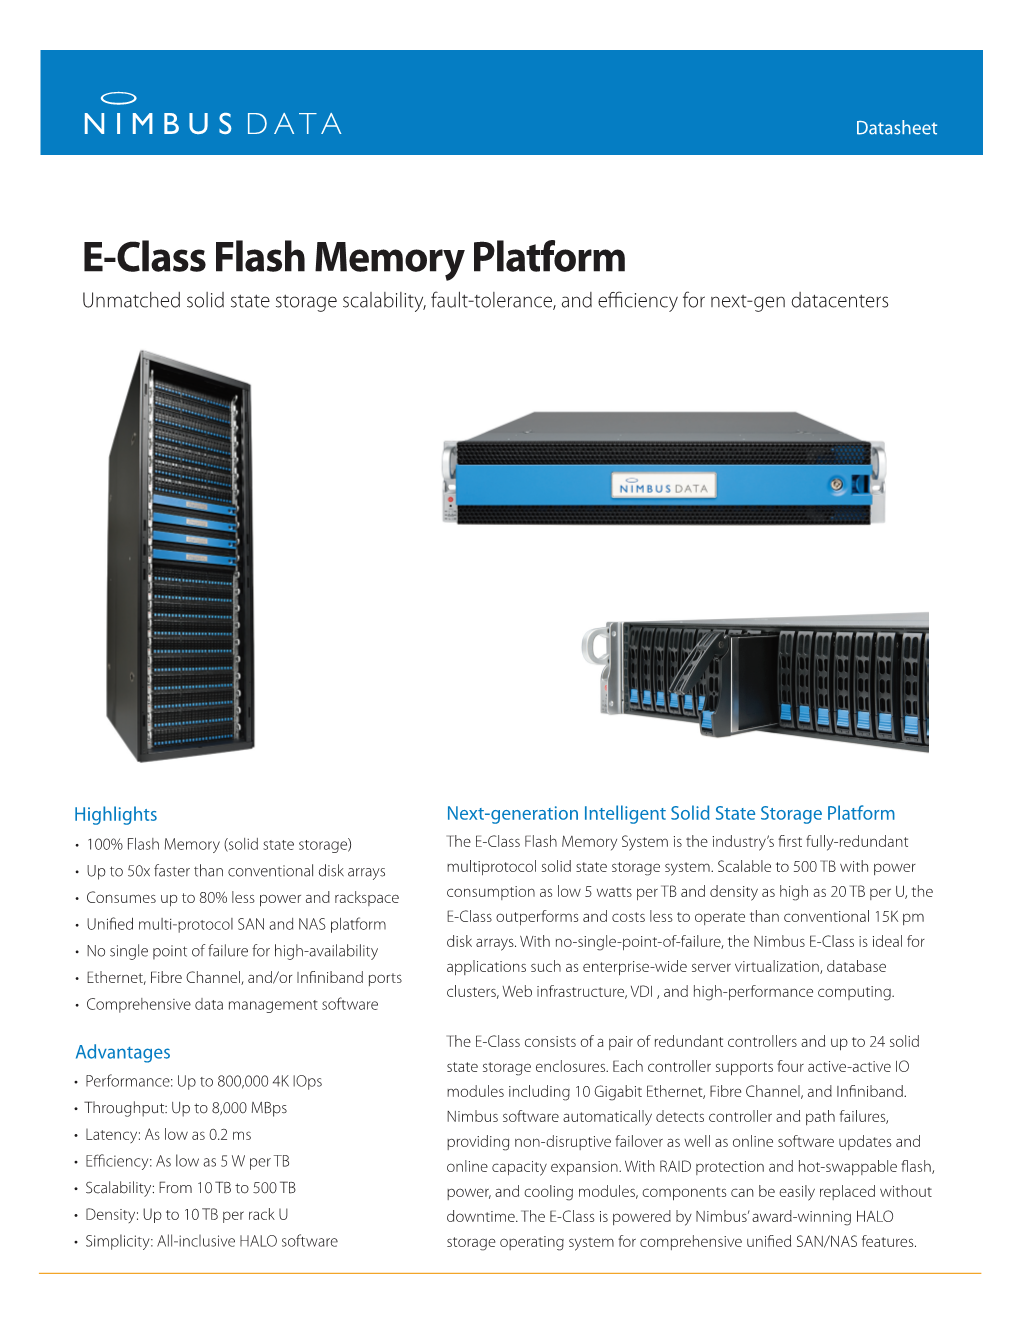 Nimbus Data E-Class Flash Memory Platform Data Sheet